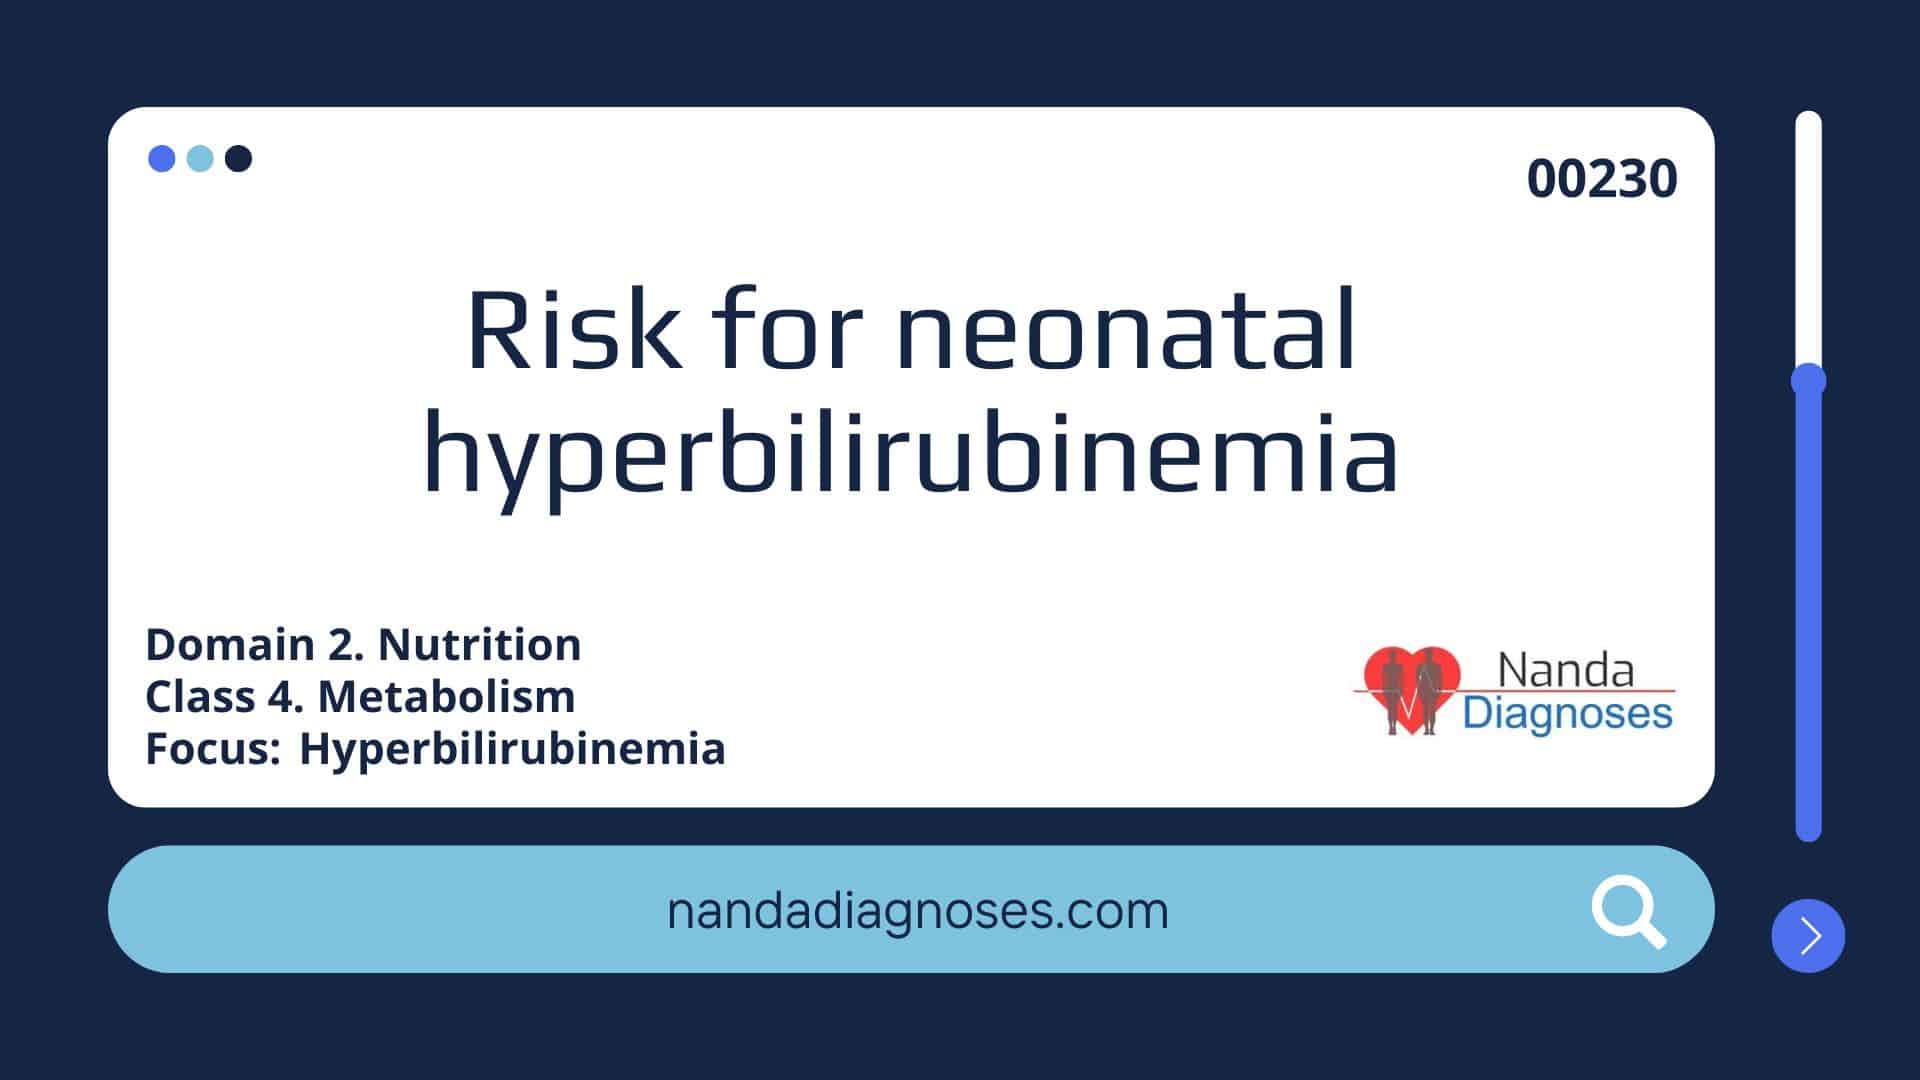 Nursing diagnosis Risk for neonatal hyperbilirubinemia